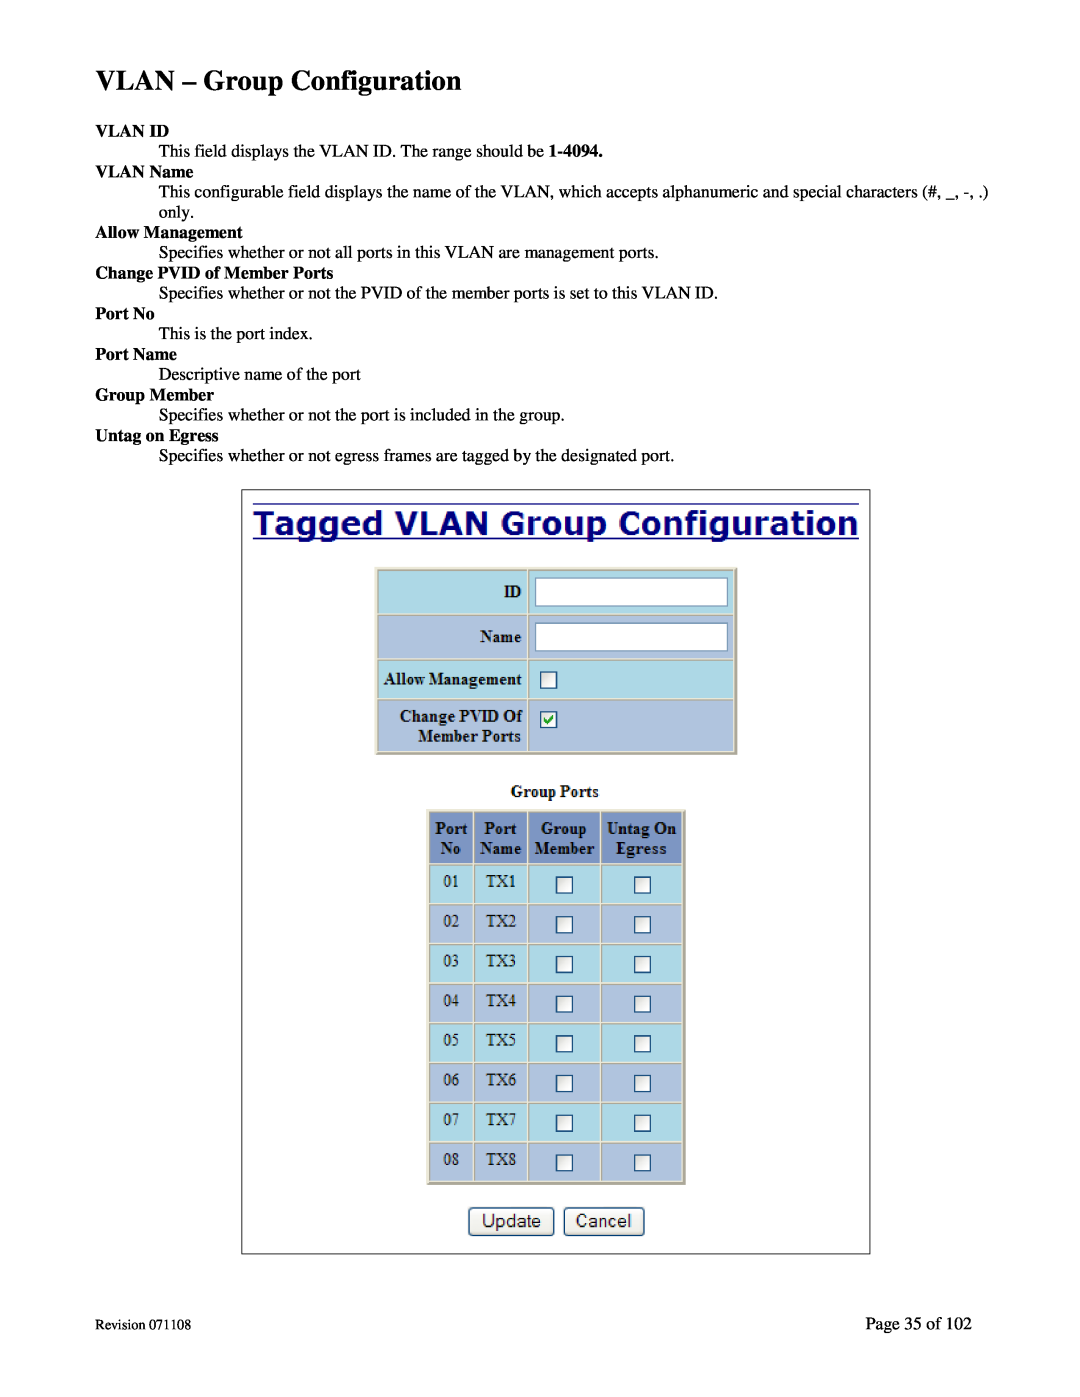 N-Tron 708M12 VLAN - Group Configuration, Vlan Id, VLAN Name, Allow Management, Change PVID of Member Ports, Port No 